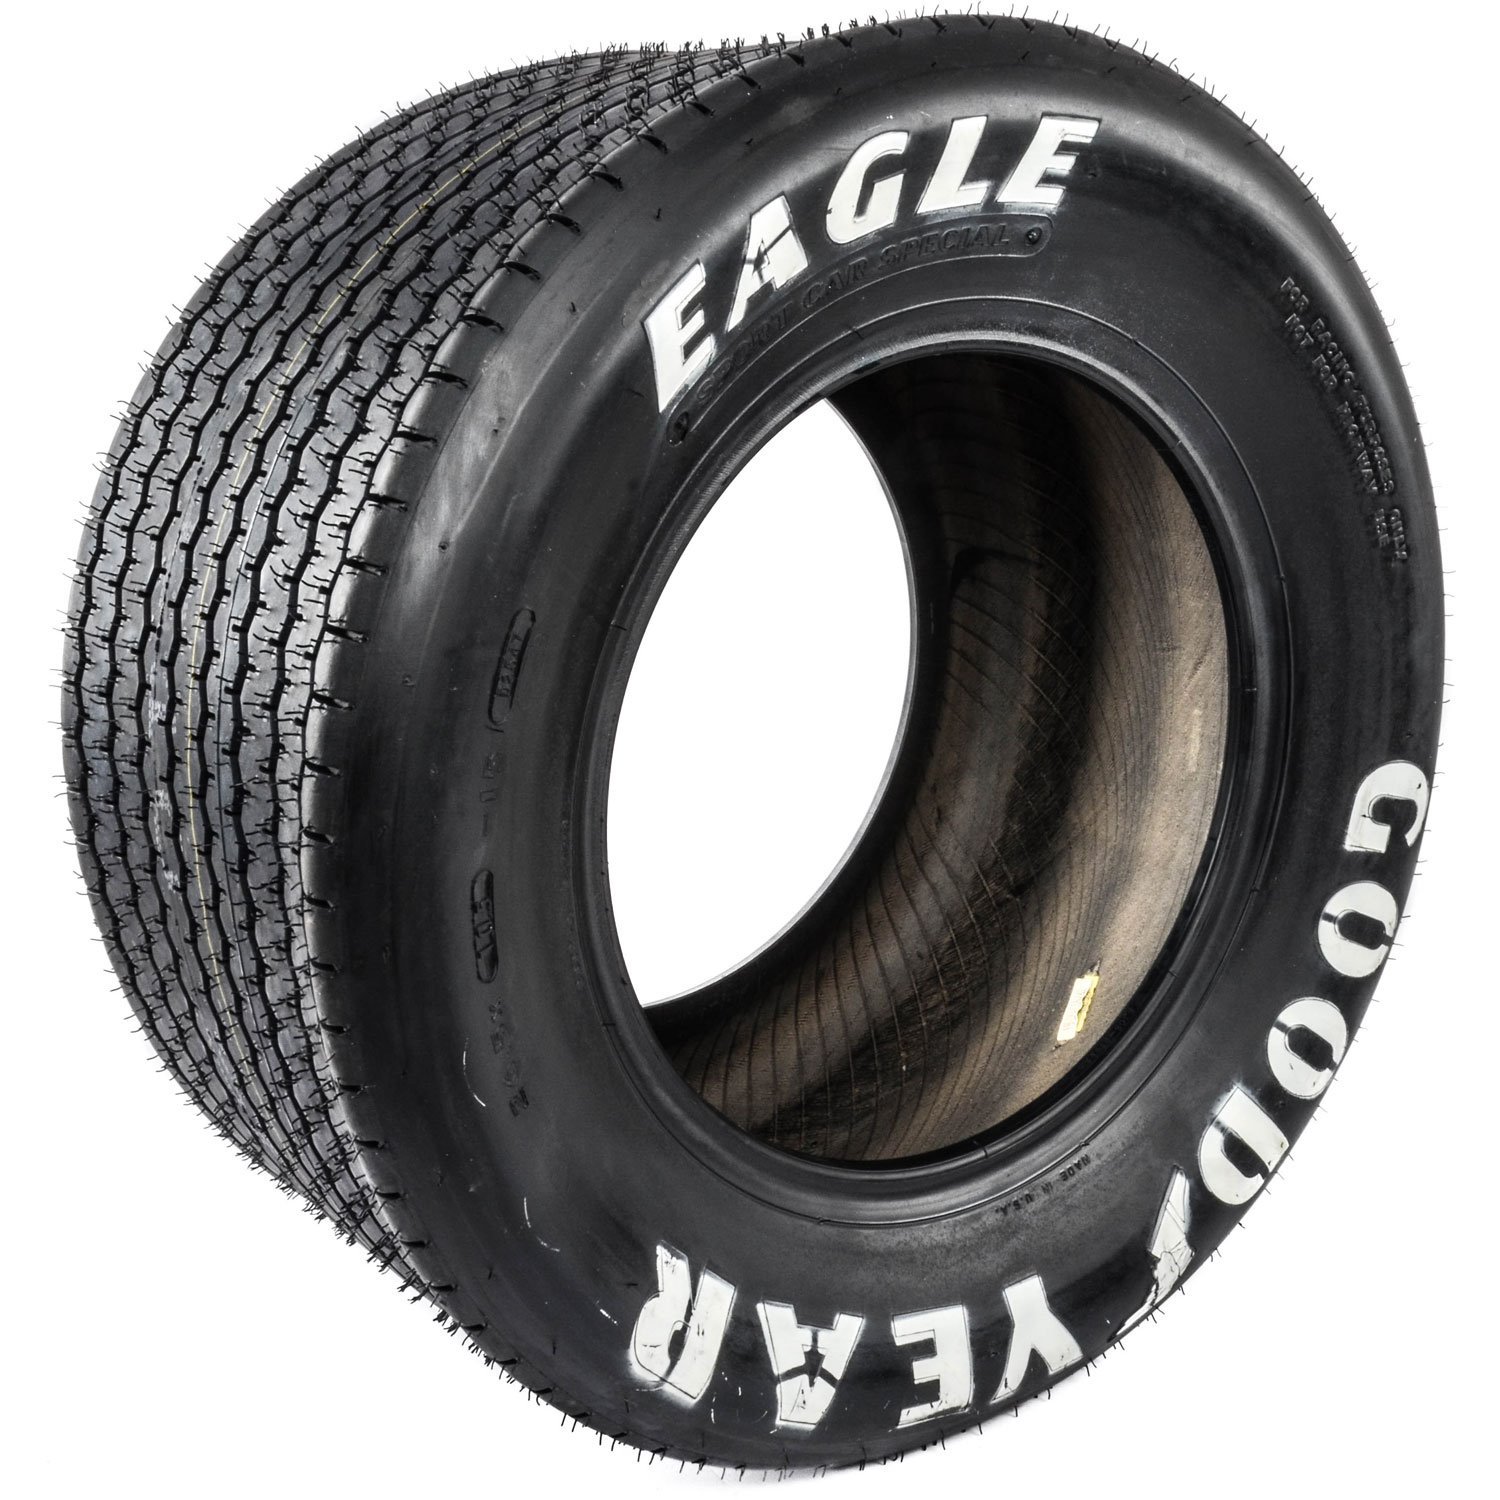 Vintage Sportscar Eagle Cobra Tire Bias Ply [26.5